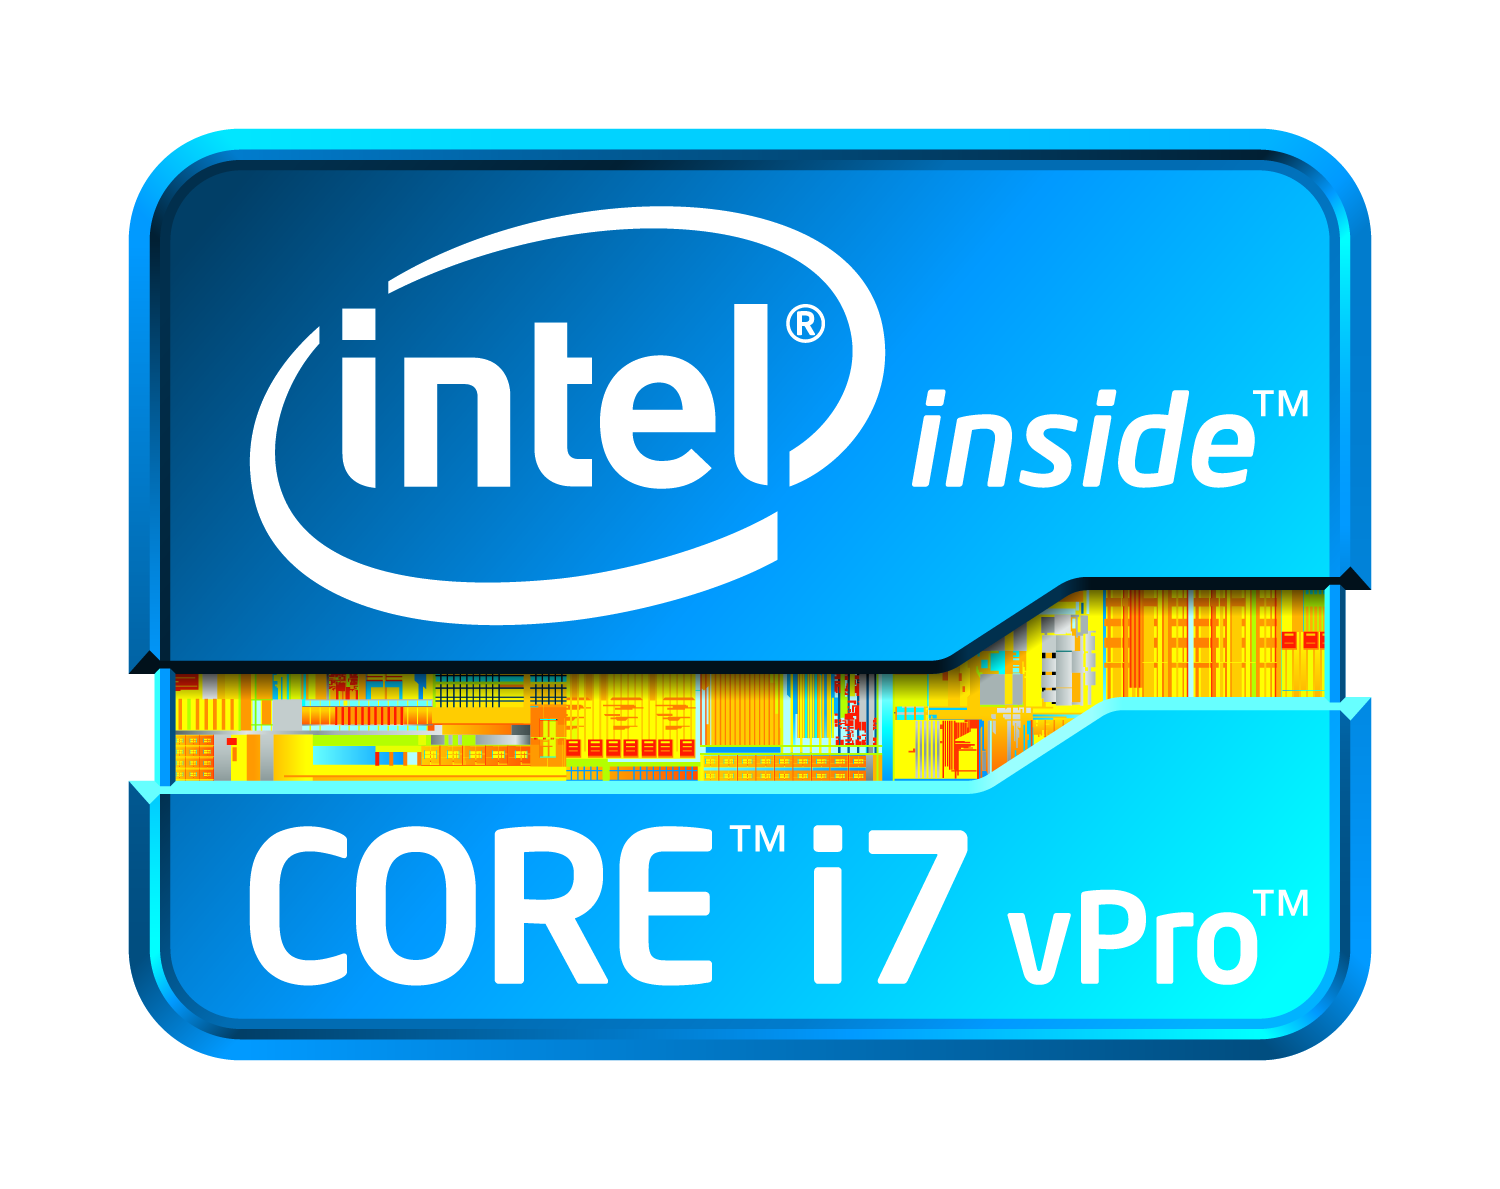 Reg intel. Intel Core i5 inside. Intel Core i5 12 logo. Core i5 vpro. Intel i7 logo.